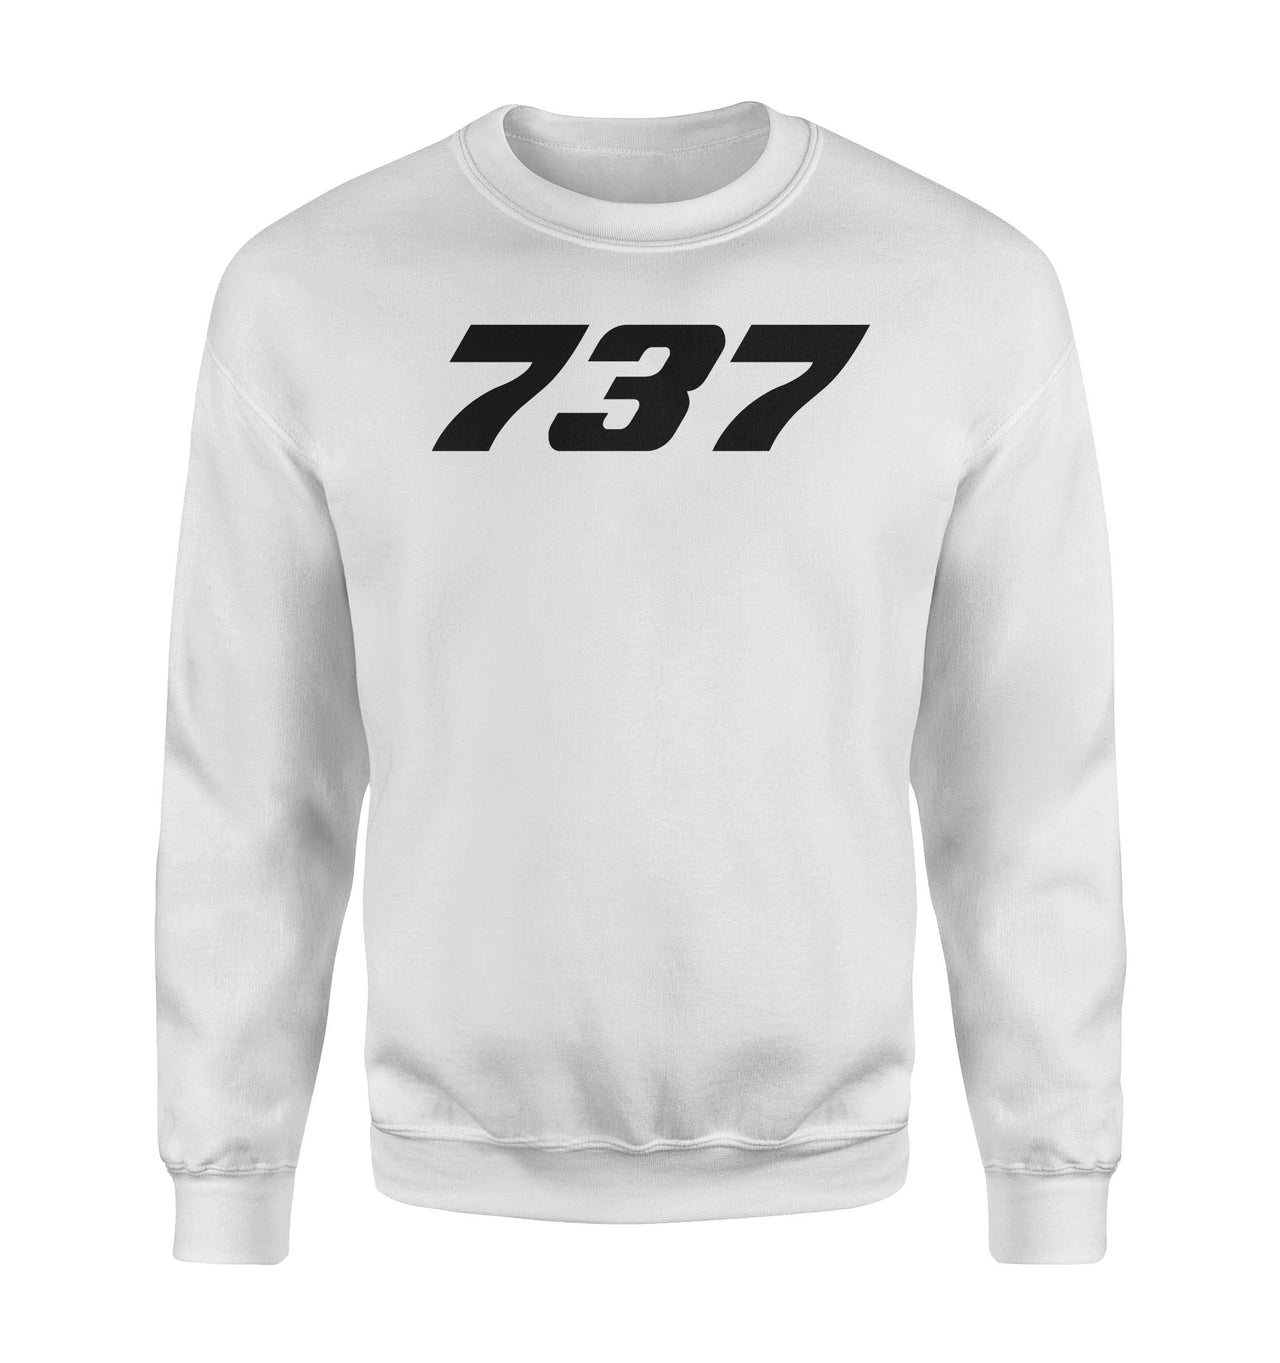 737 Flat Text Designed Sweatshirts